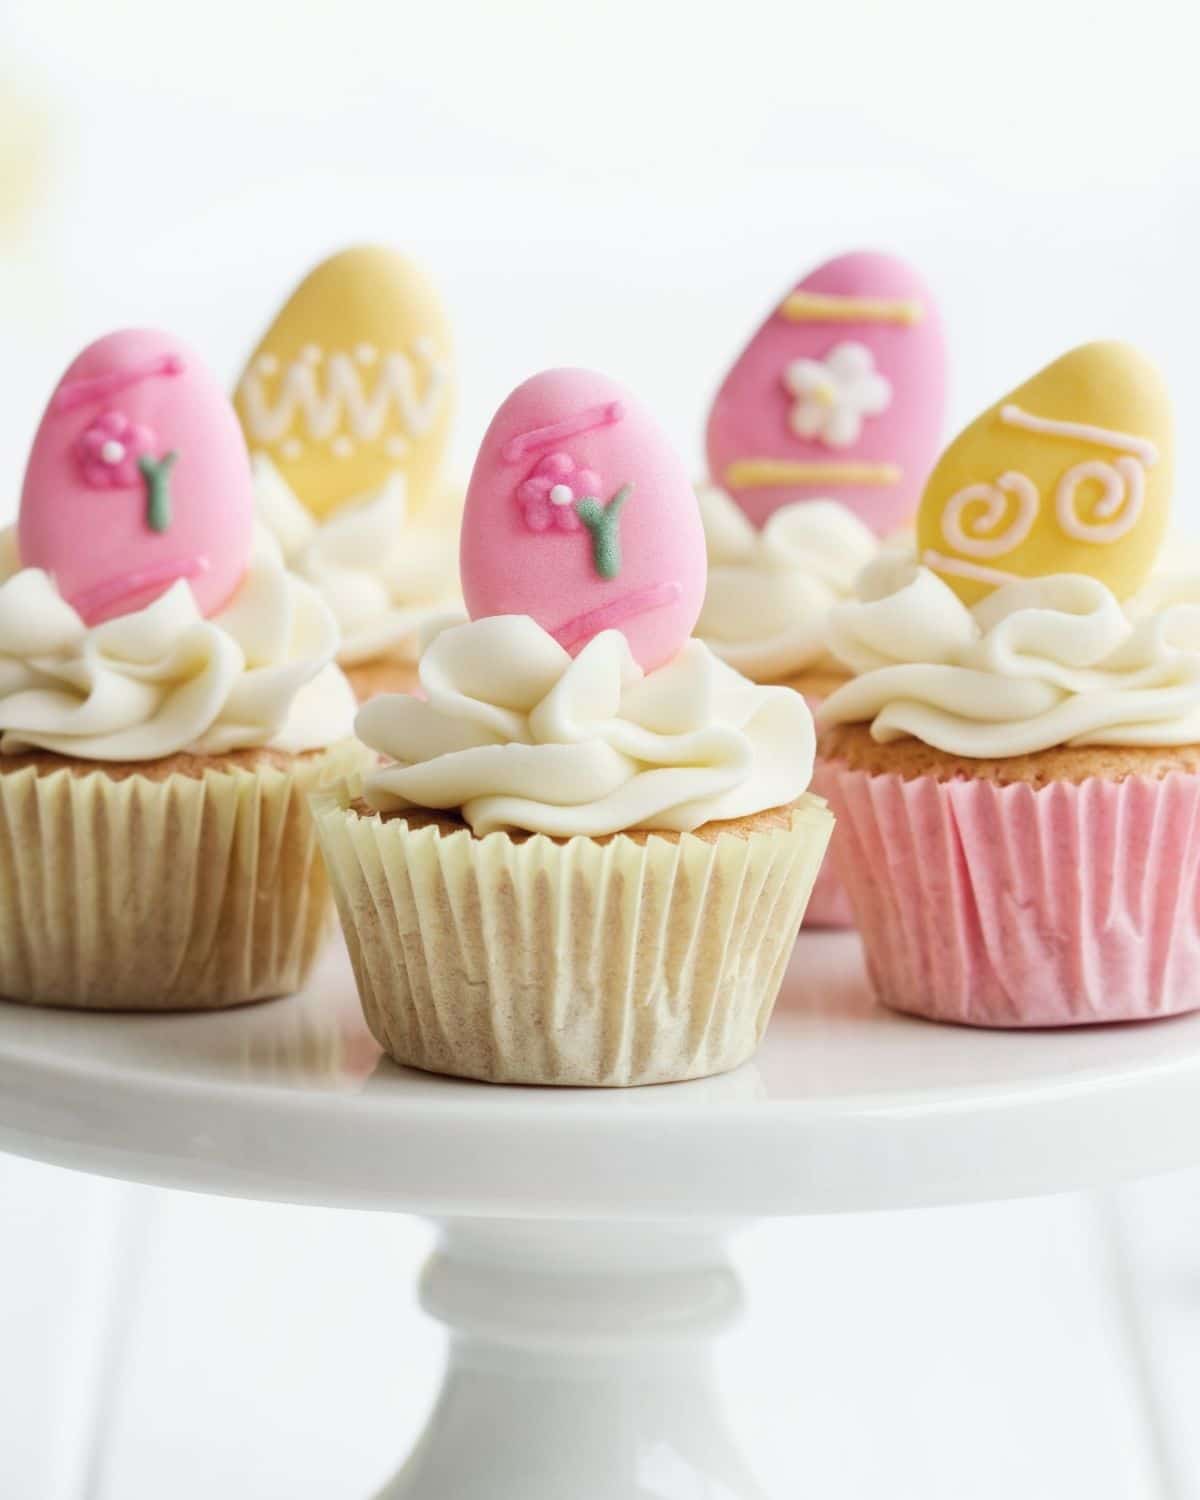 40 Fun and Festive Easter Dessert Ideas